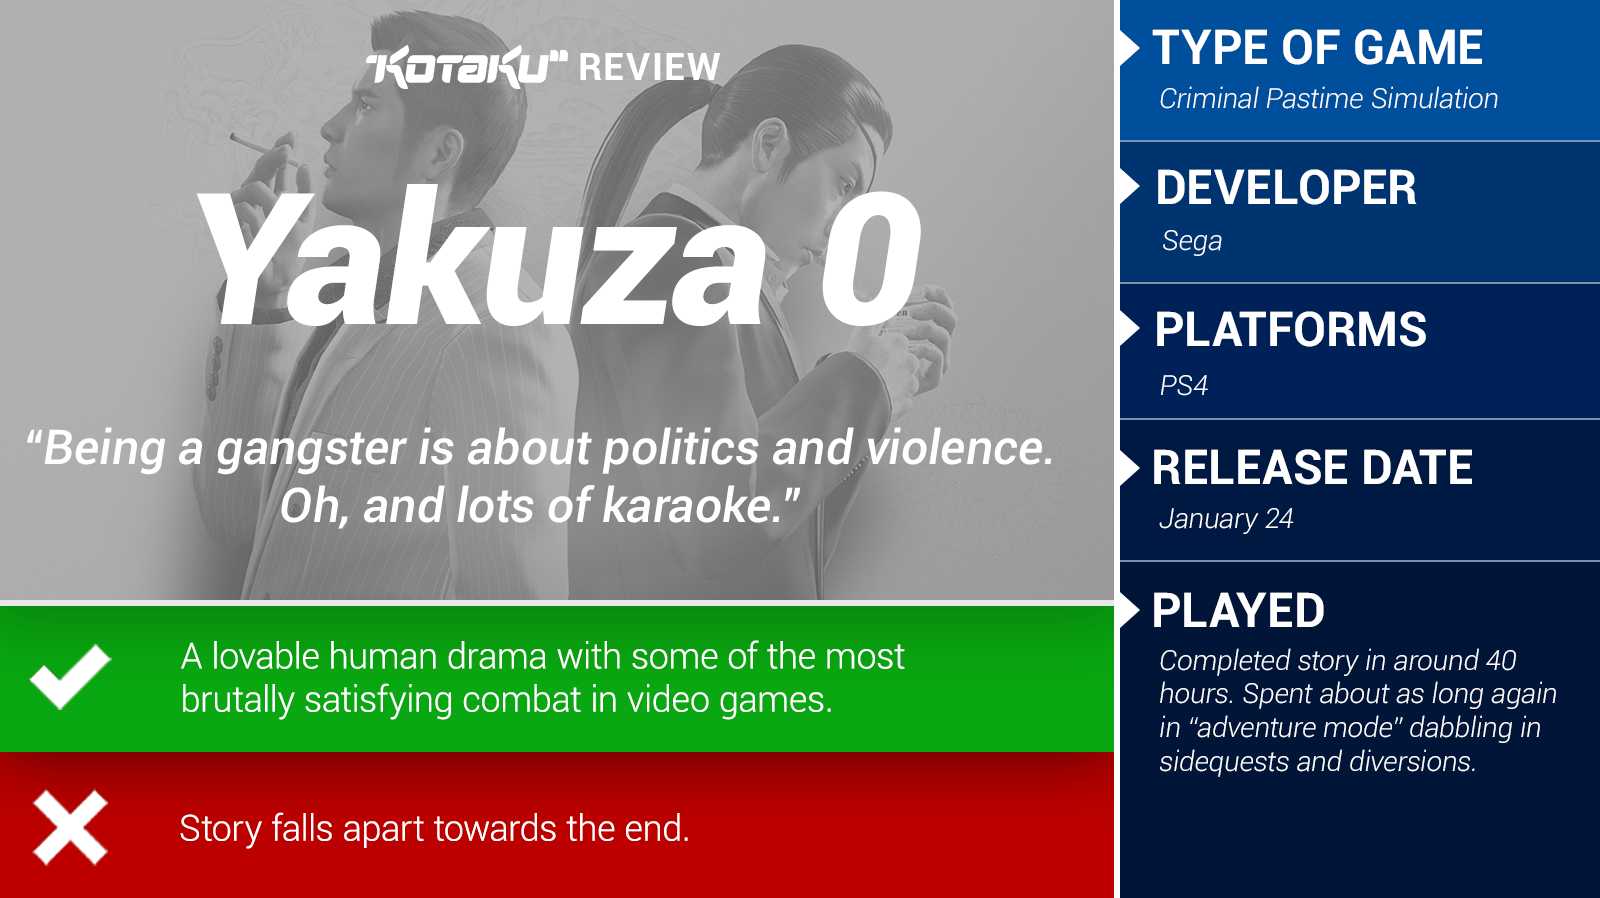 Yakuza 0: The Kotaku Review